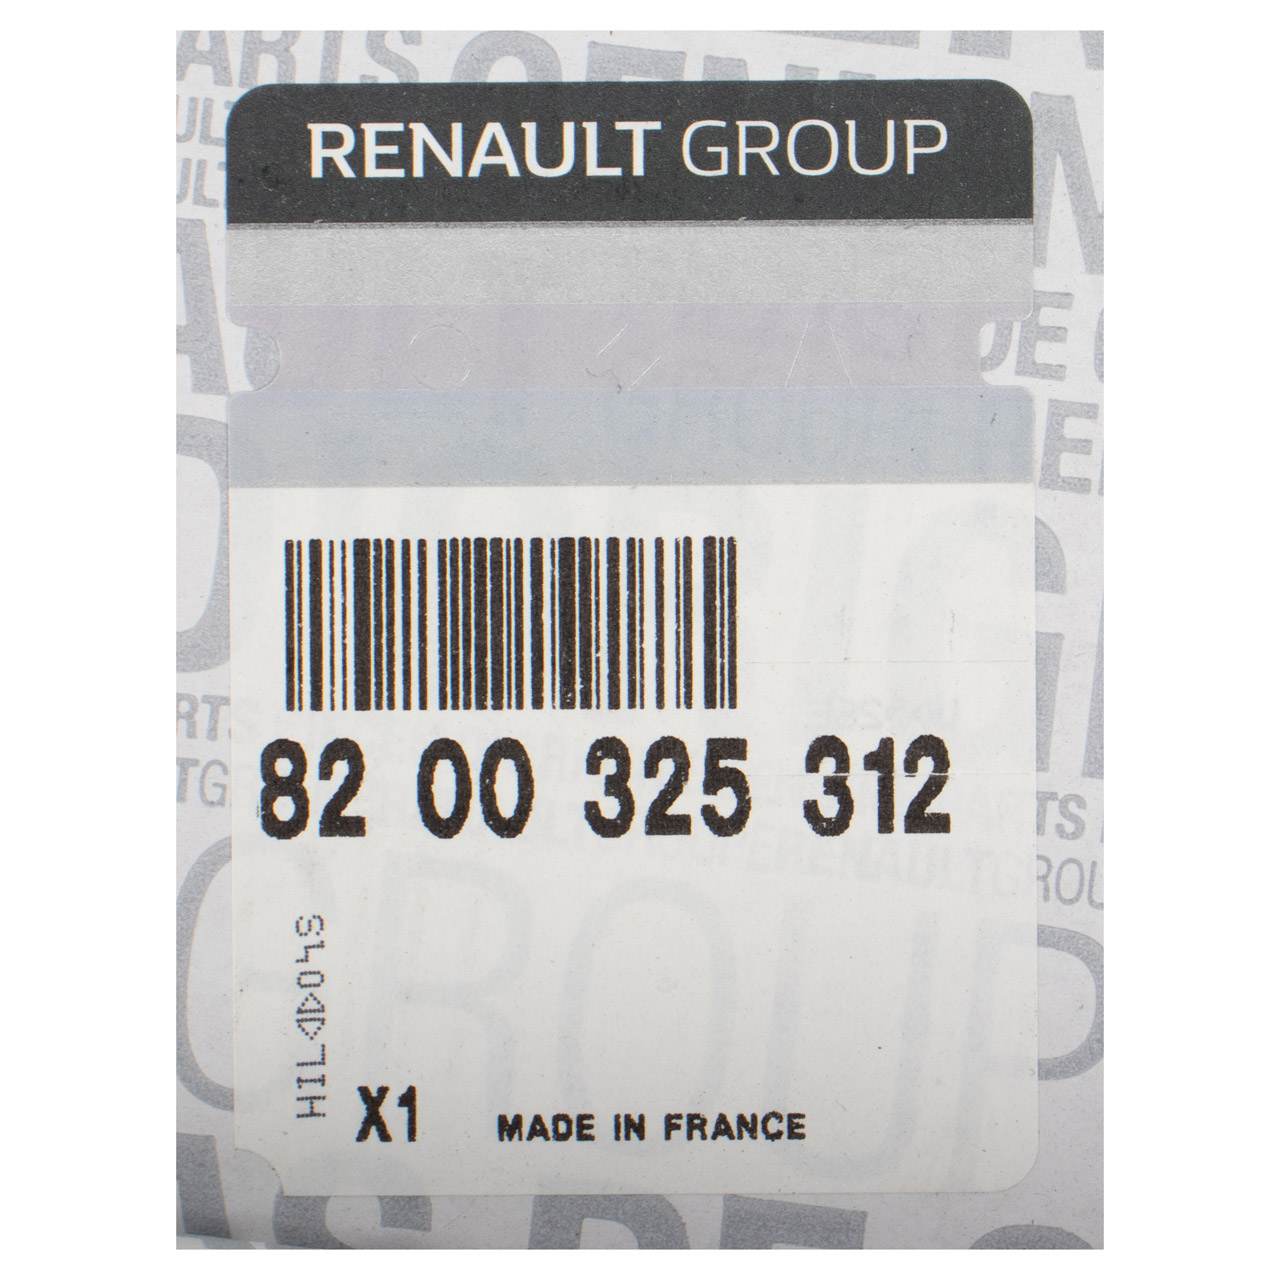 ORIGINAL Renault Abdeckblech Bremsscheibe Clio 3 4 Modus hinten 8200325312